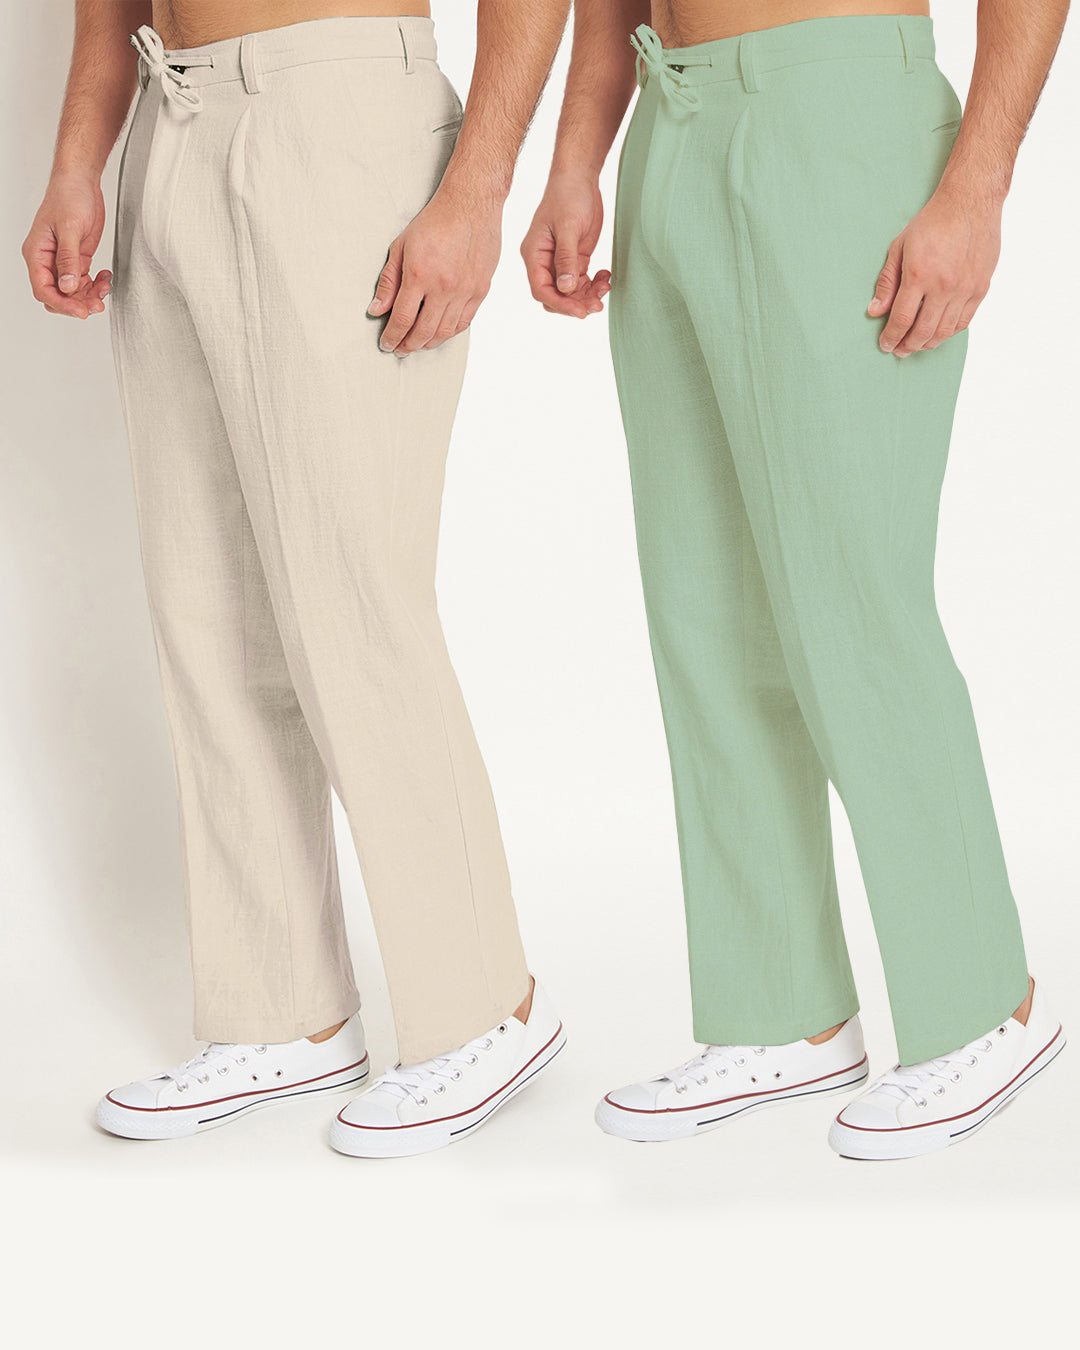 Combo: Casual Ease Beige & Spring Green Men's Pants - Set of 2